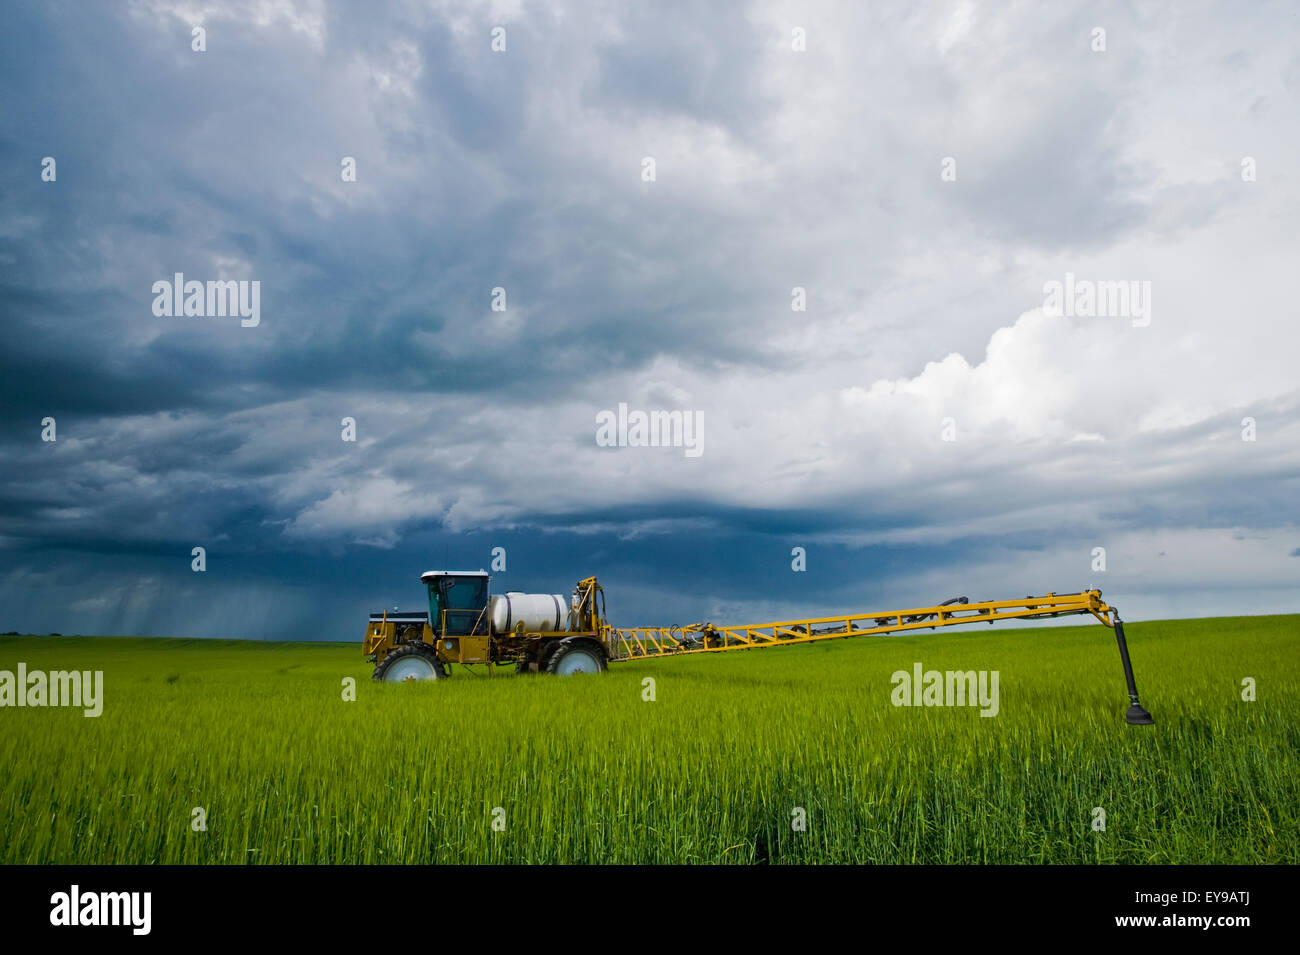 Kanada, Getreide, Feld, Traktor, Gerste, Gewitterwolke Stockfoto